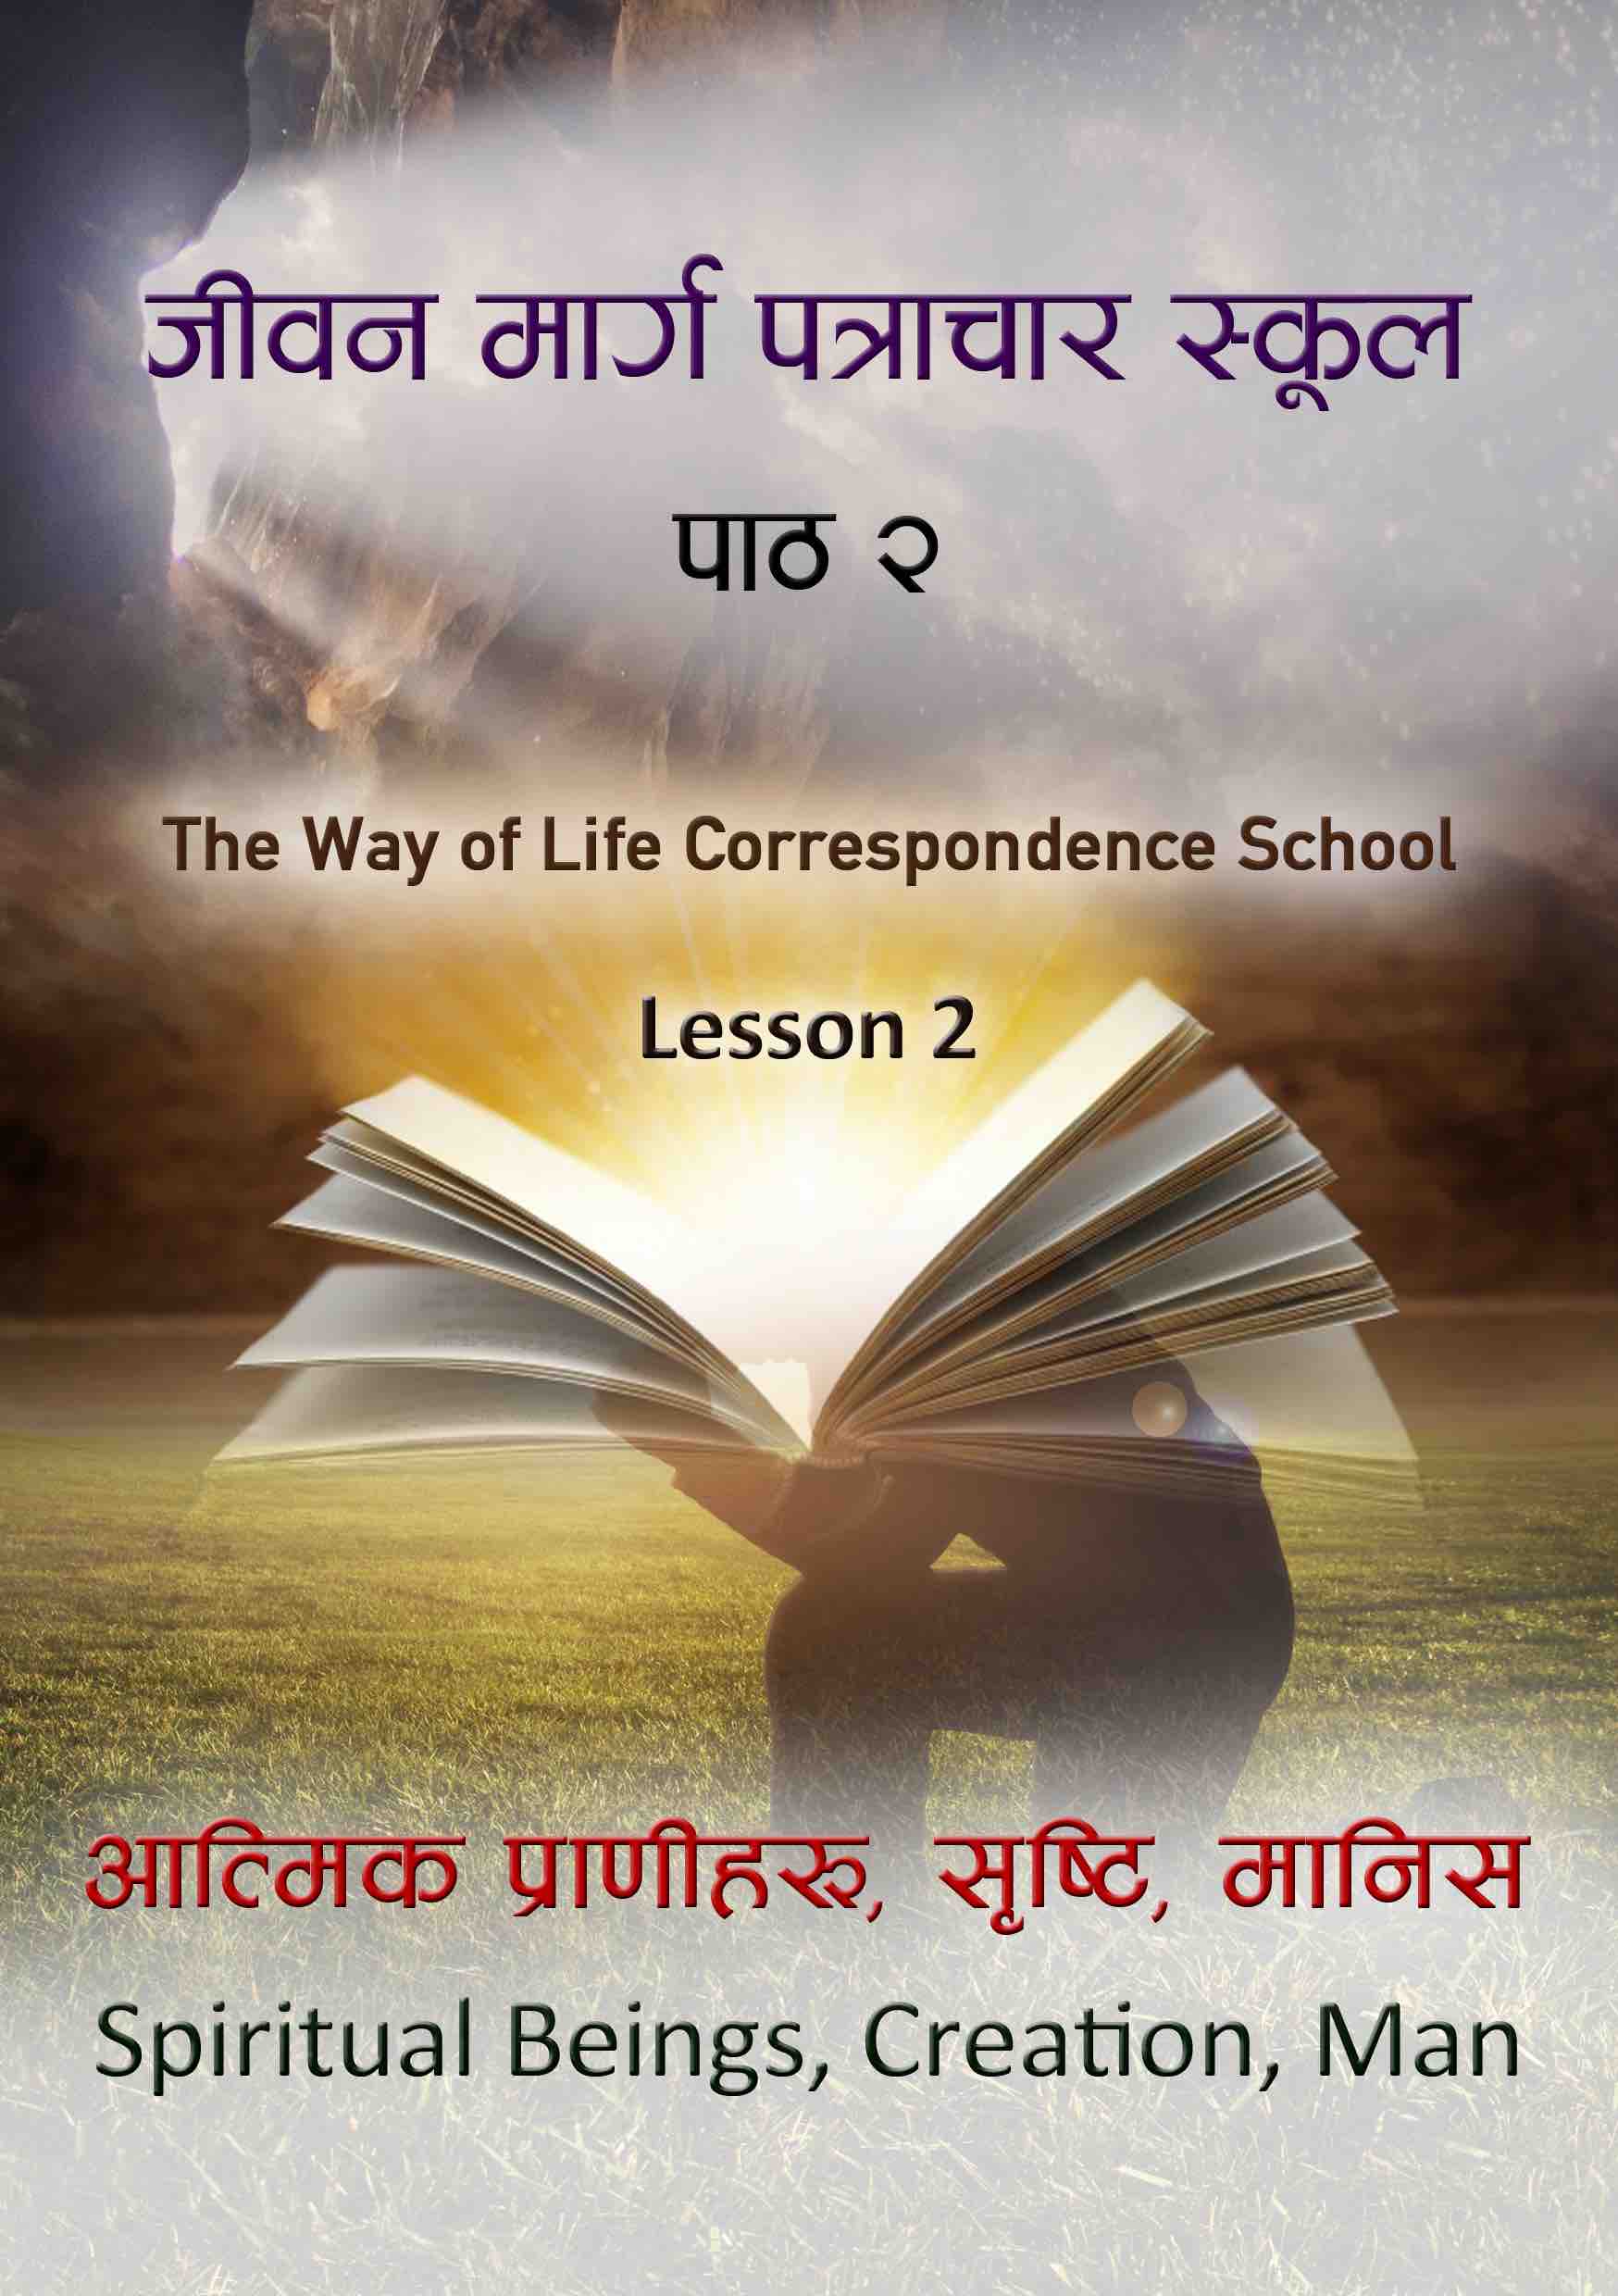 Nepali Lessons - Lesson 2